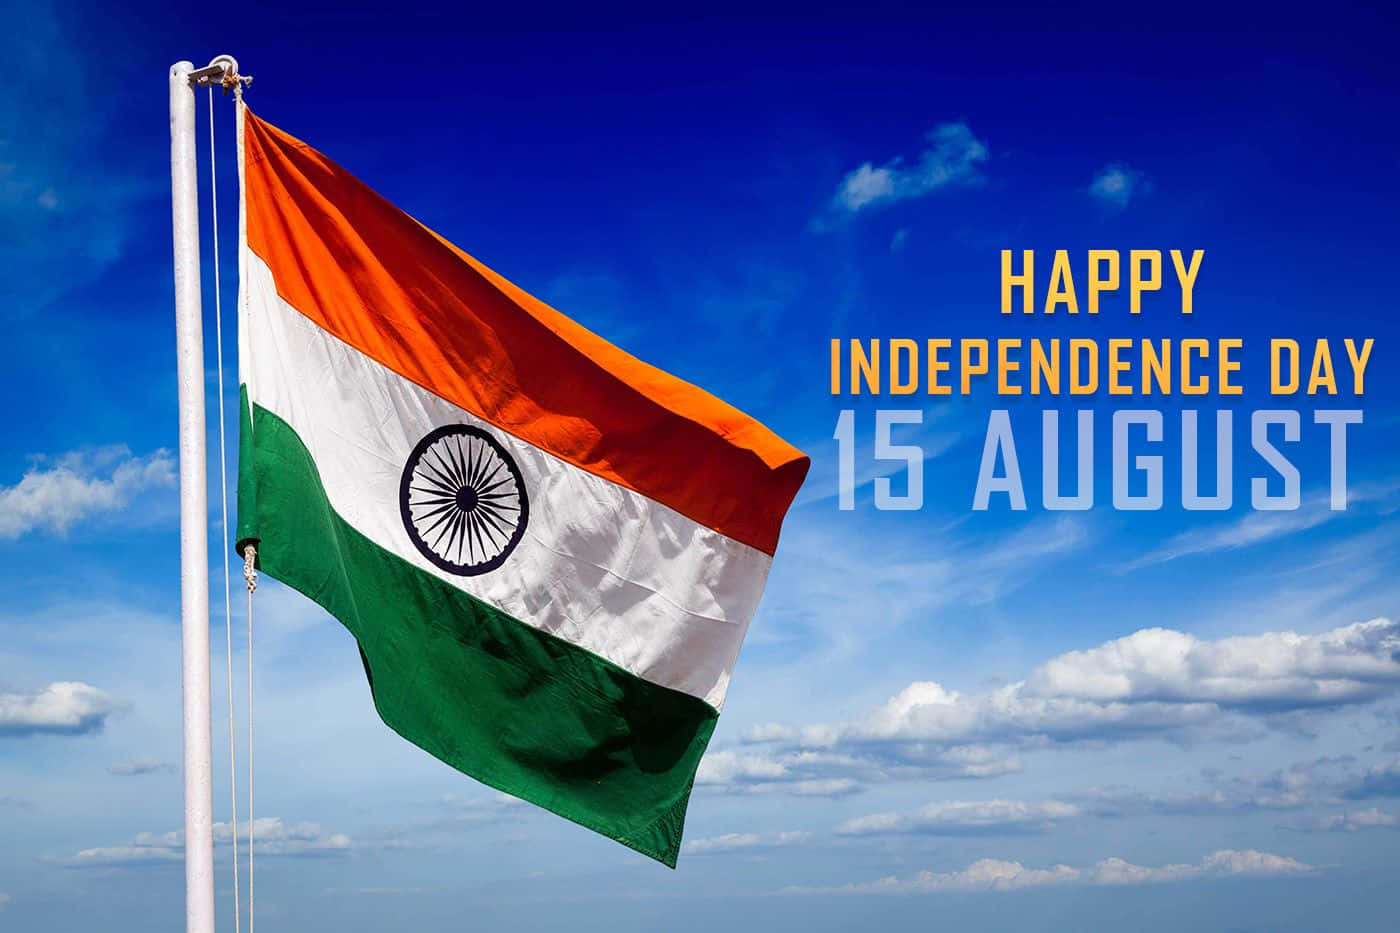 Celebrating independence day.